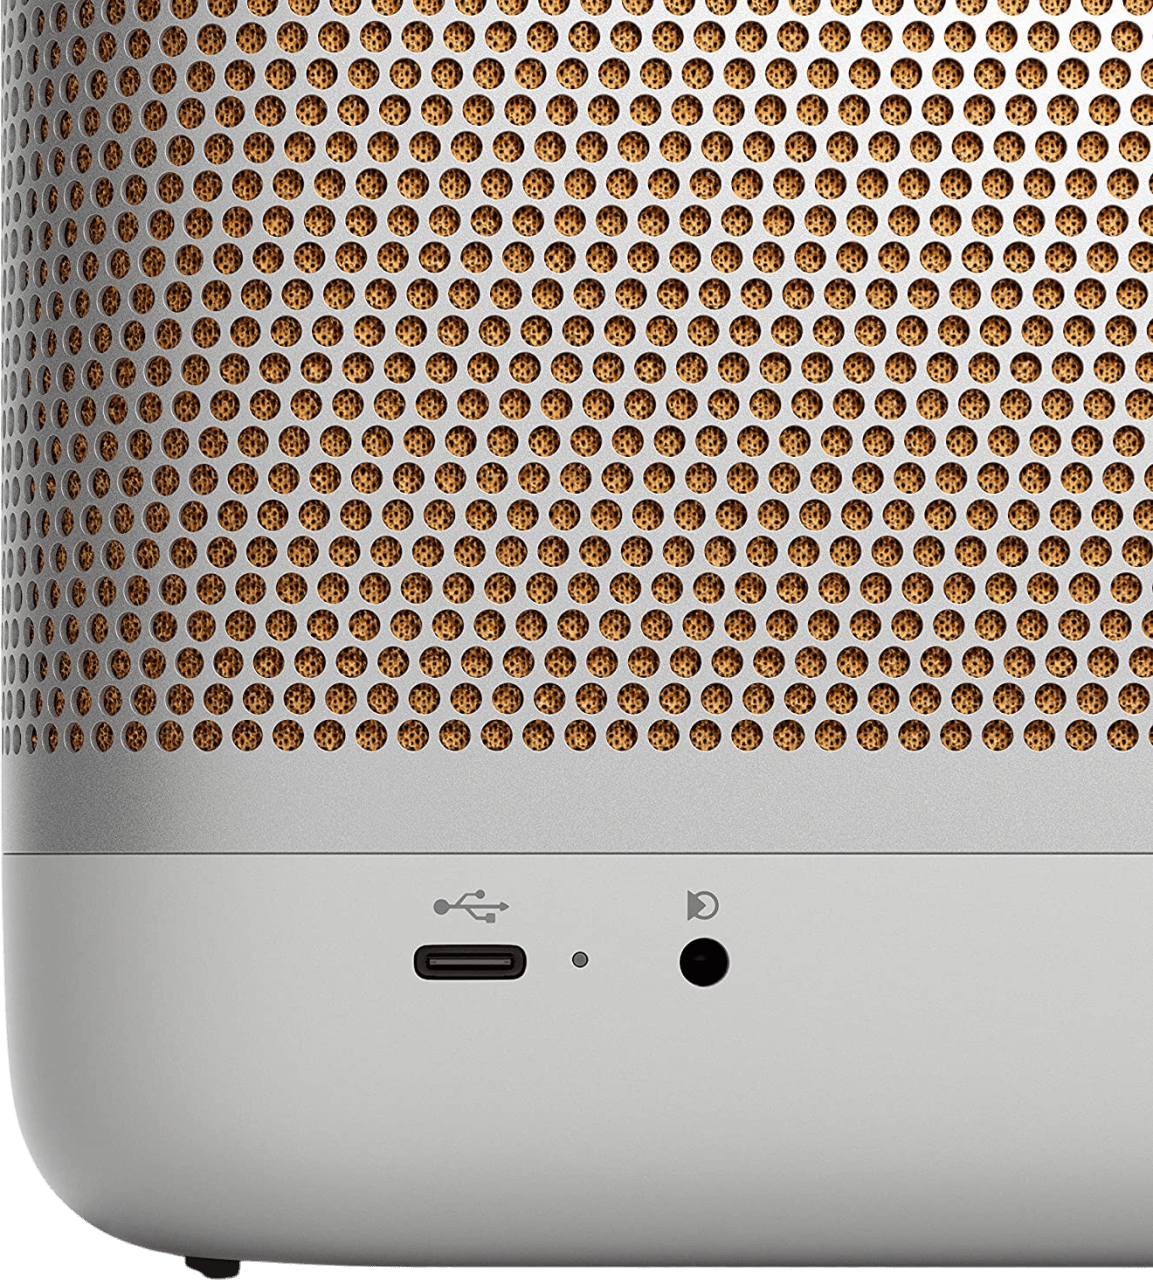 Grey Mist Bang & Olufsen Beolit 20 Portable Bluetooth Speaker.6